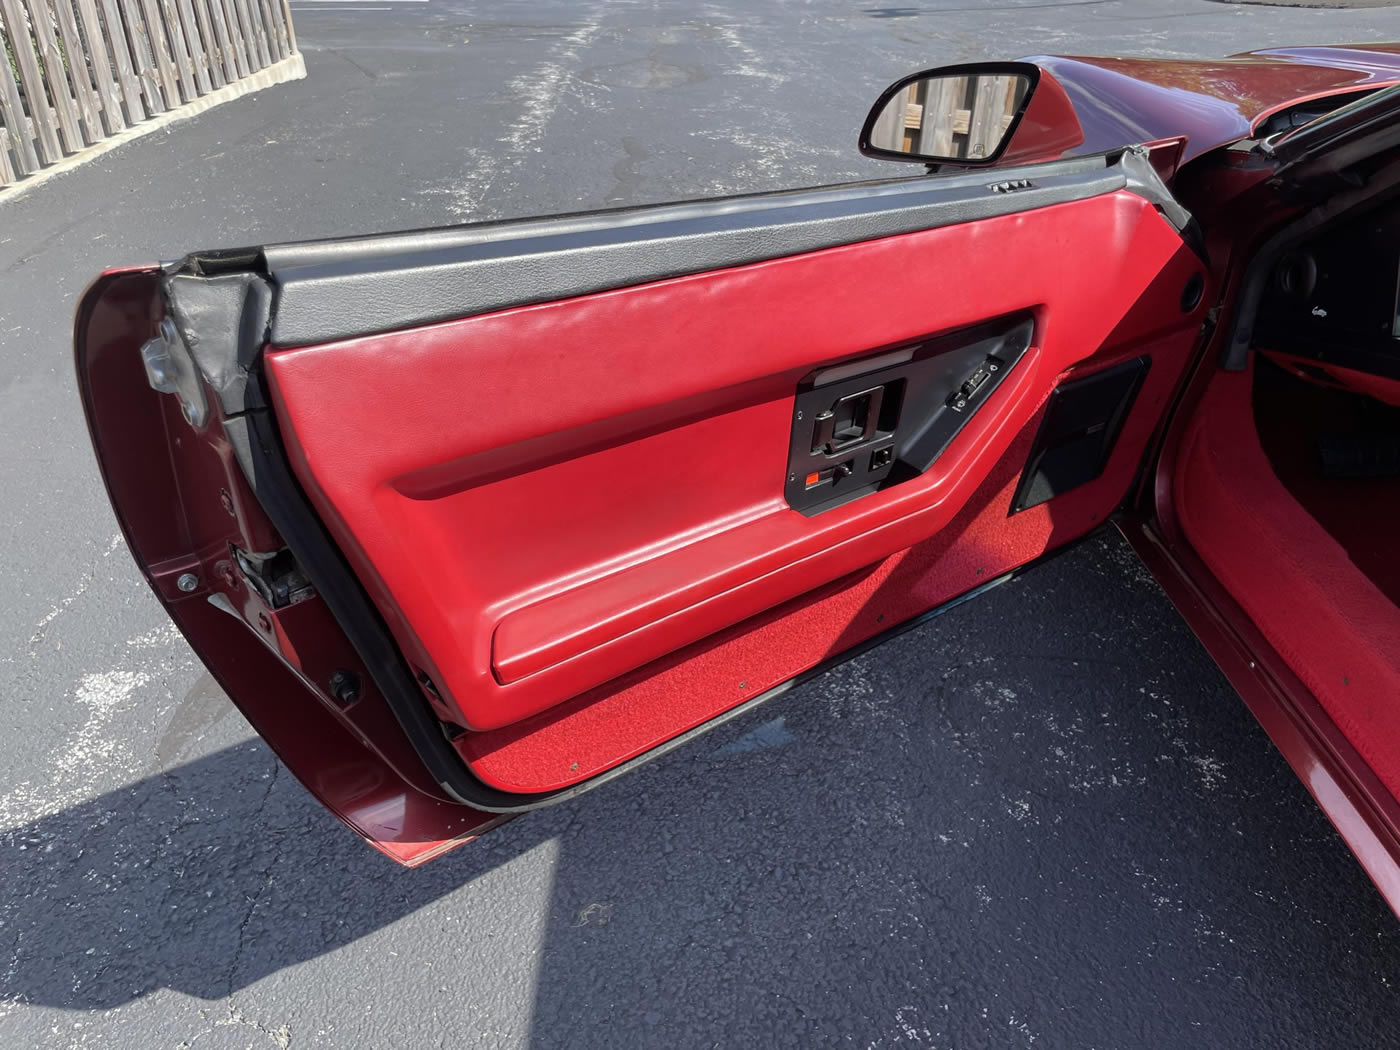 1988 Corvette Coupe in Dark Red Metallic